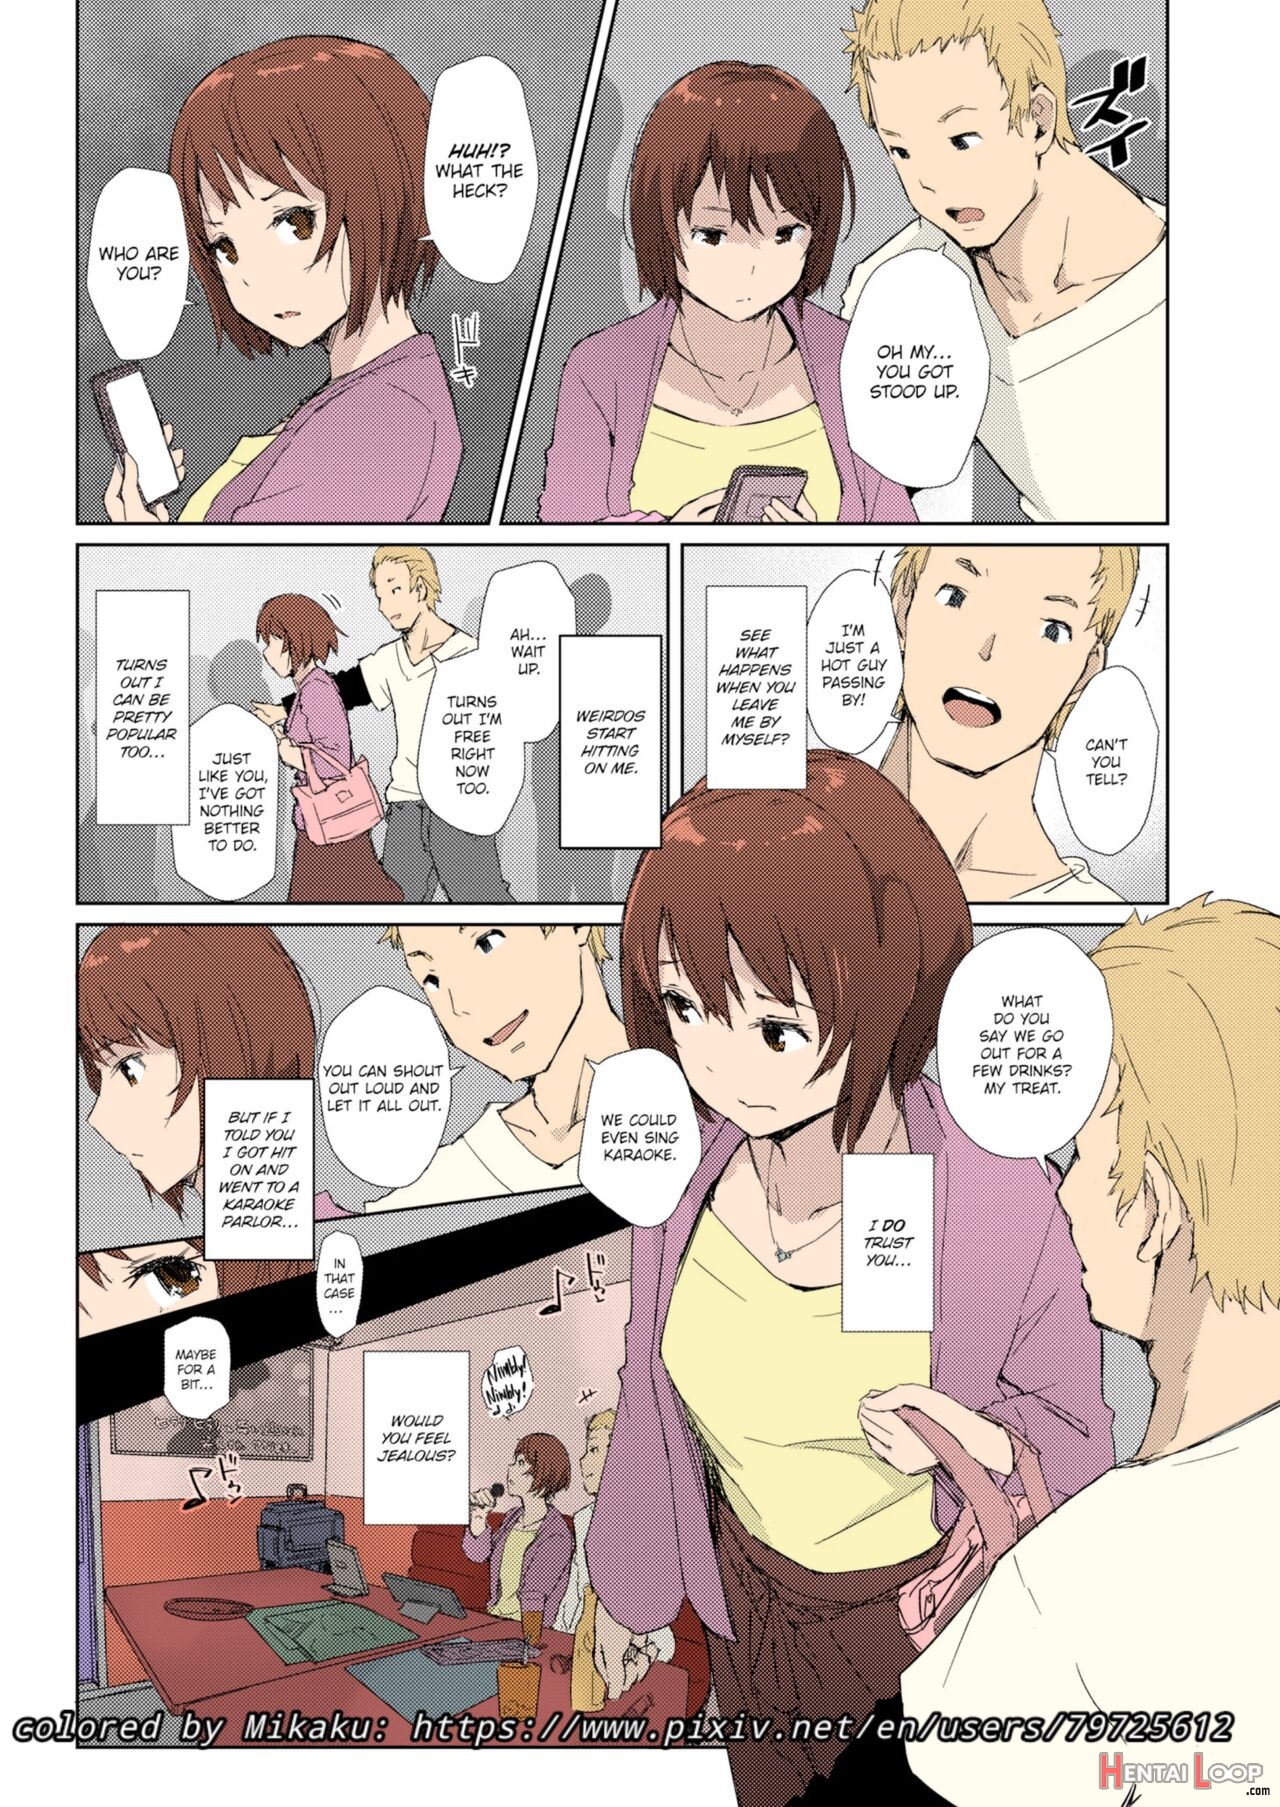 Misunderstanding Love Hotel Netorare & Kimi No Na Wa: After Story - Mitsuha ~netorare~ page 4